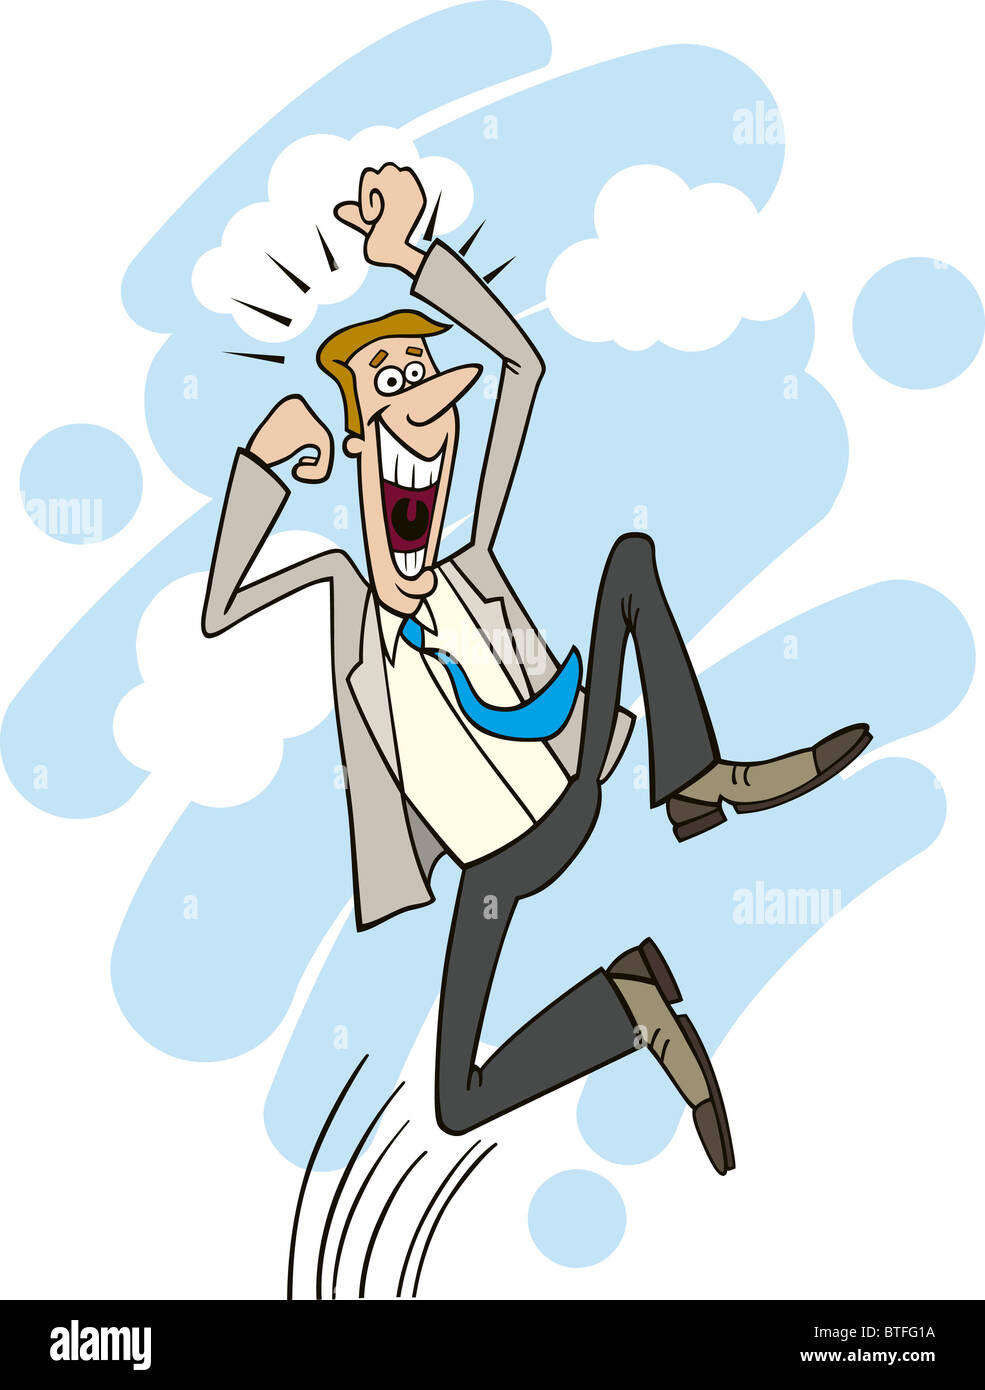 Illustration of happy stockbroker jumping Stock Photo